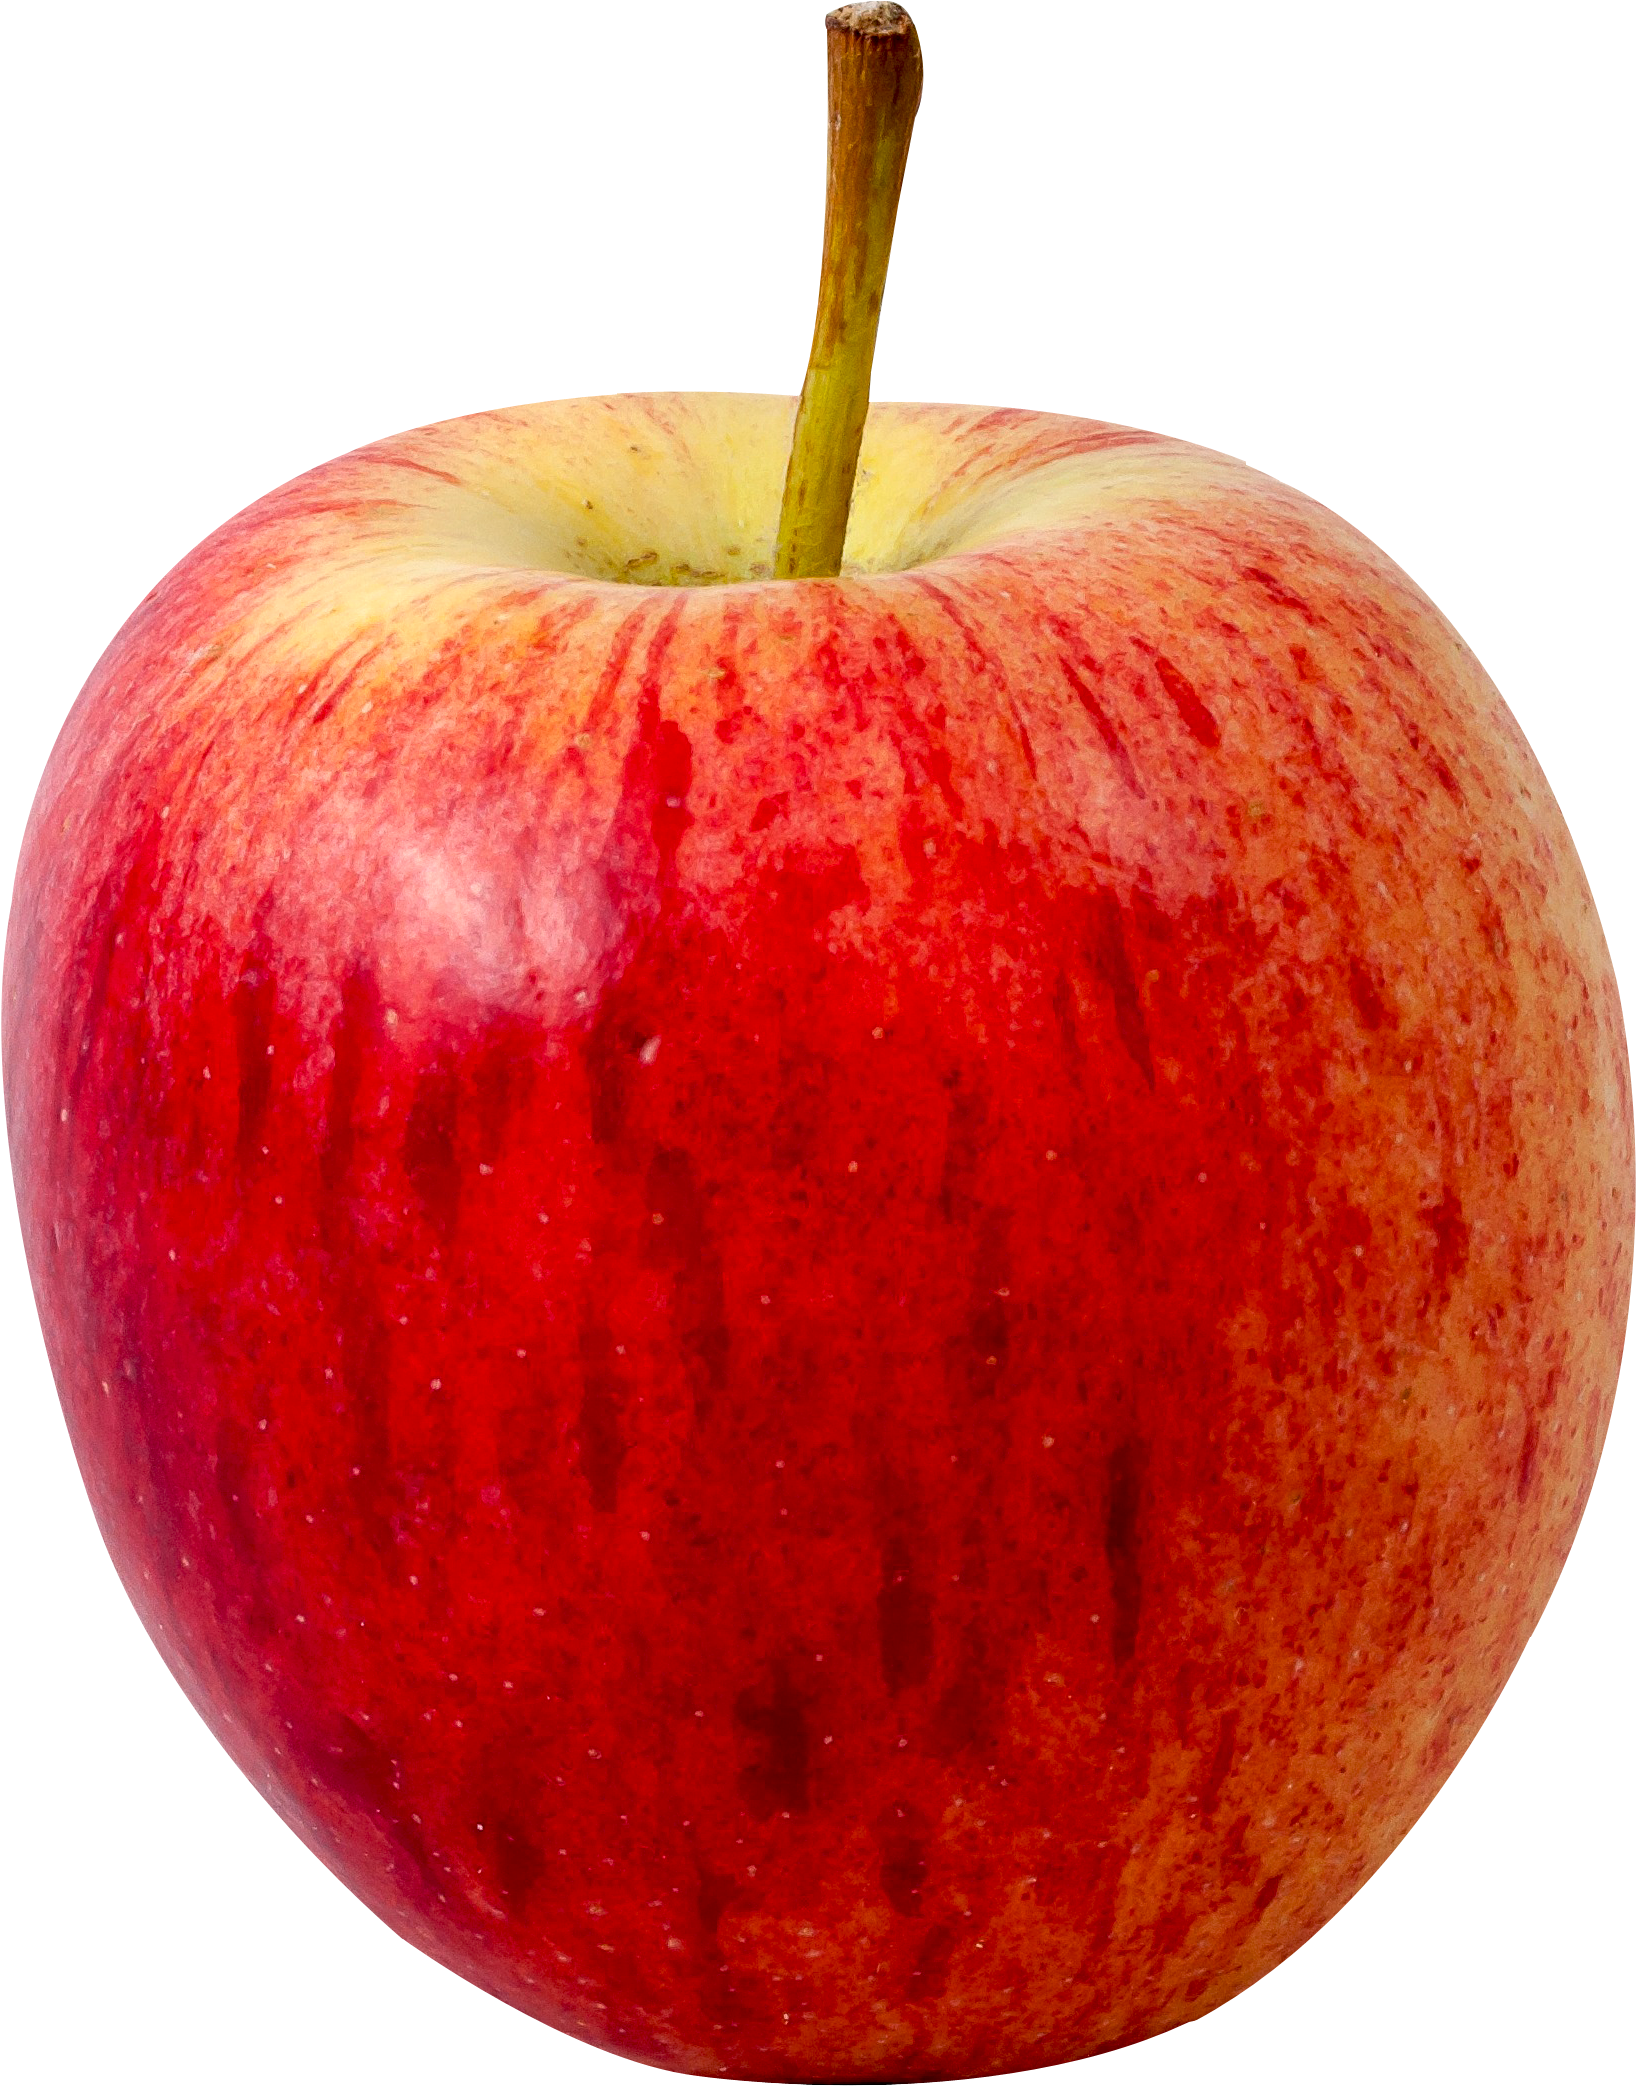 Apple Fruit PNG Images Transparent Background | PNG Play